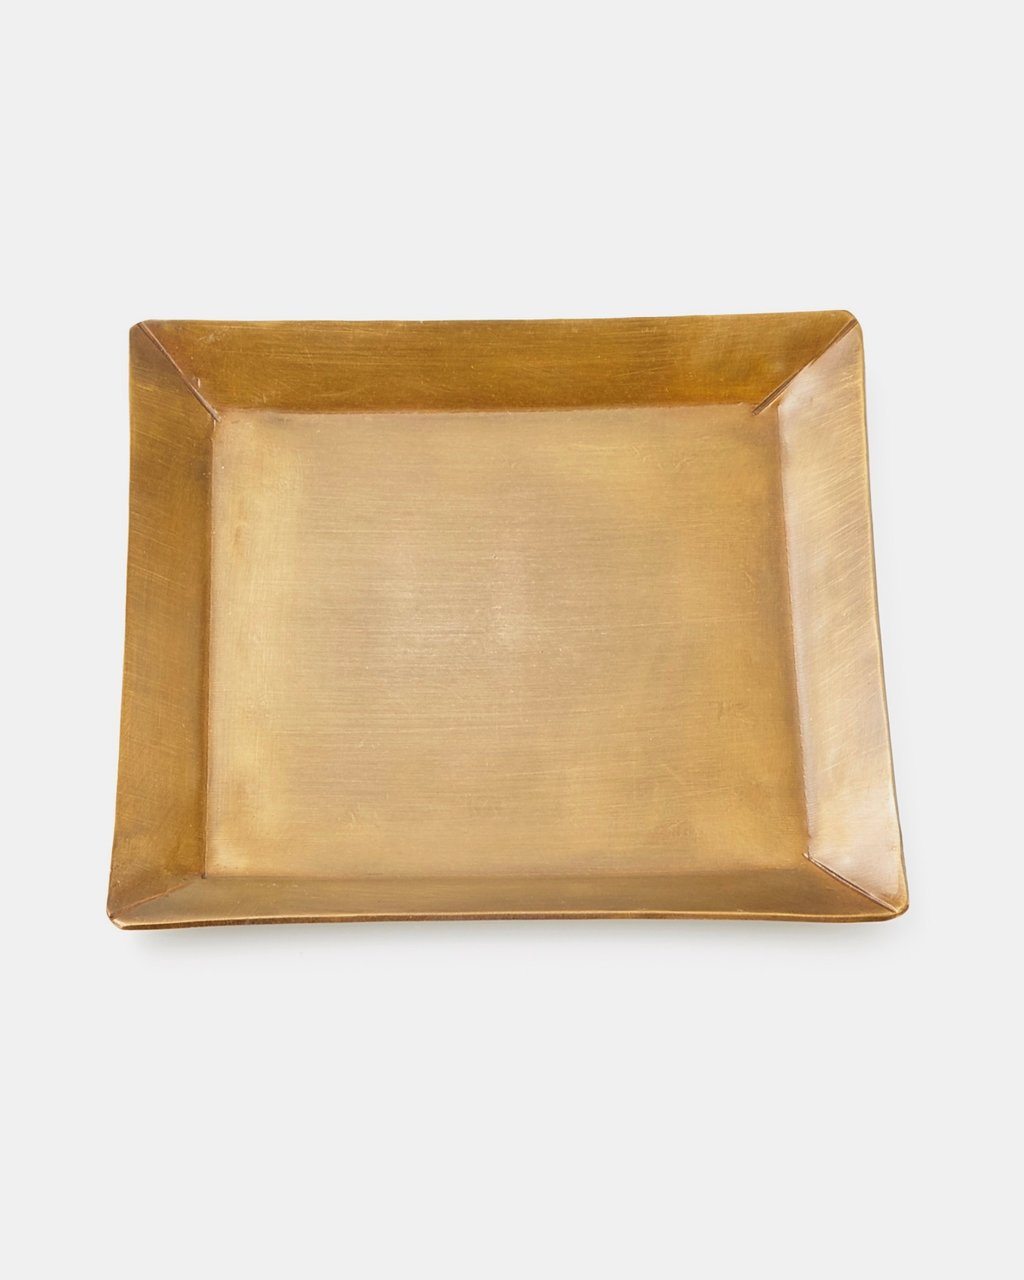 Fog Linen, Handmade Brass Square Plate, One-Size- Placewares